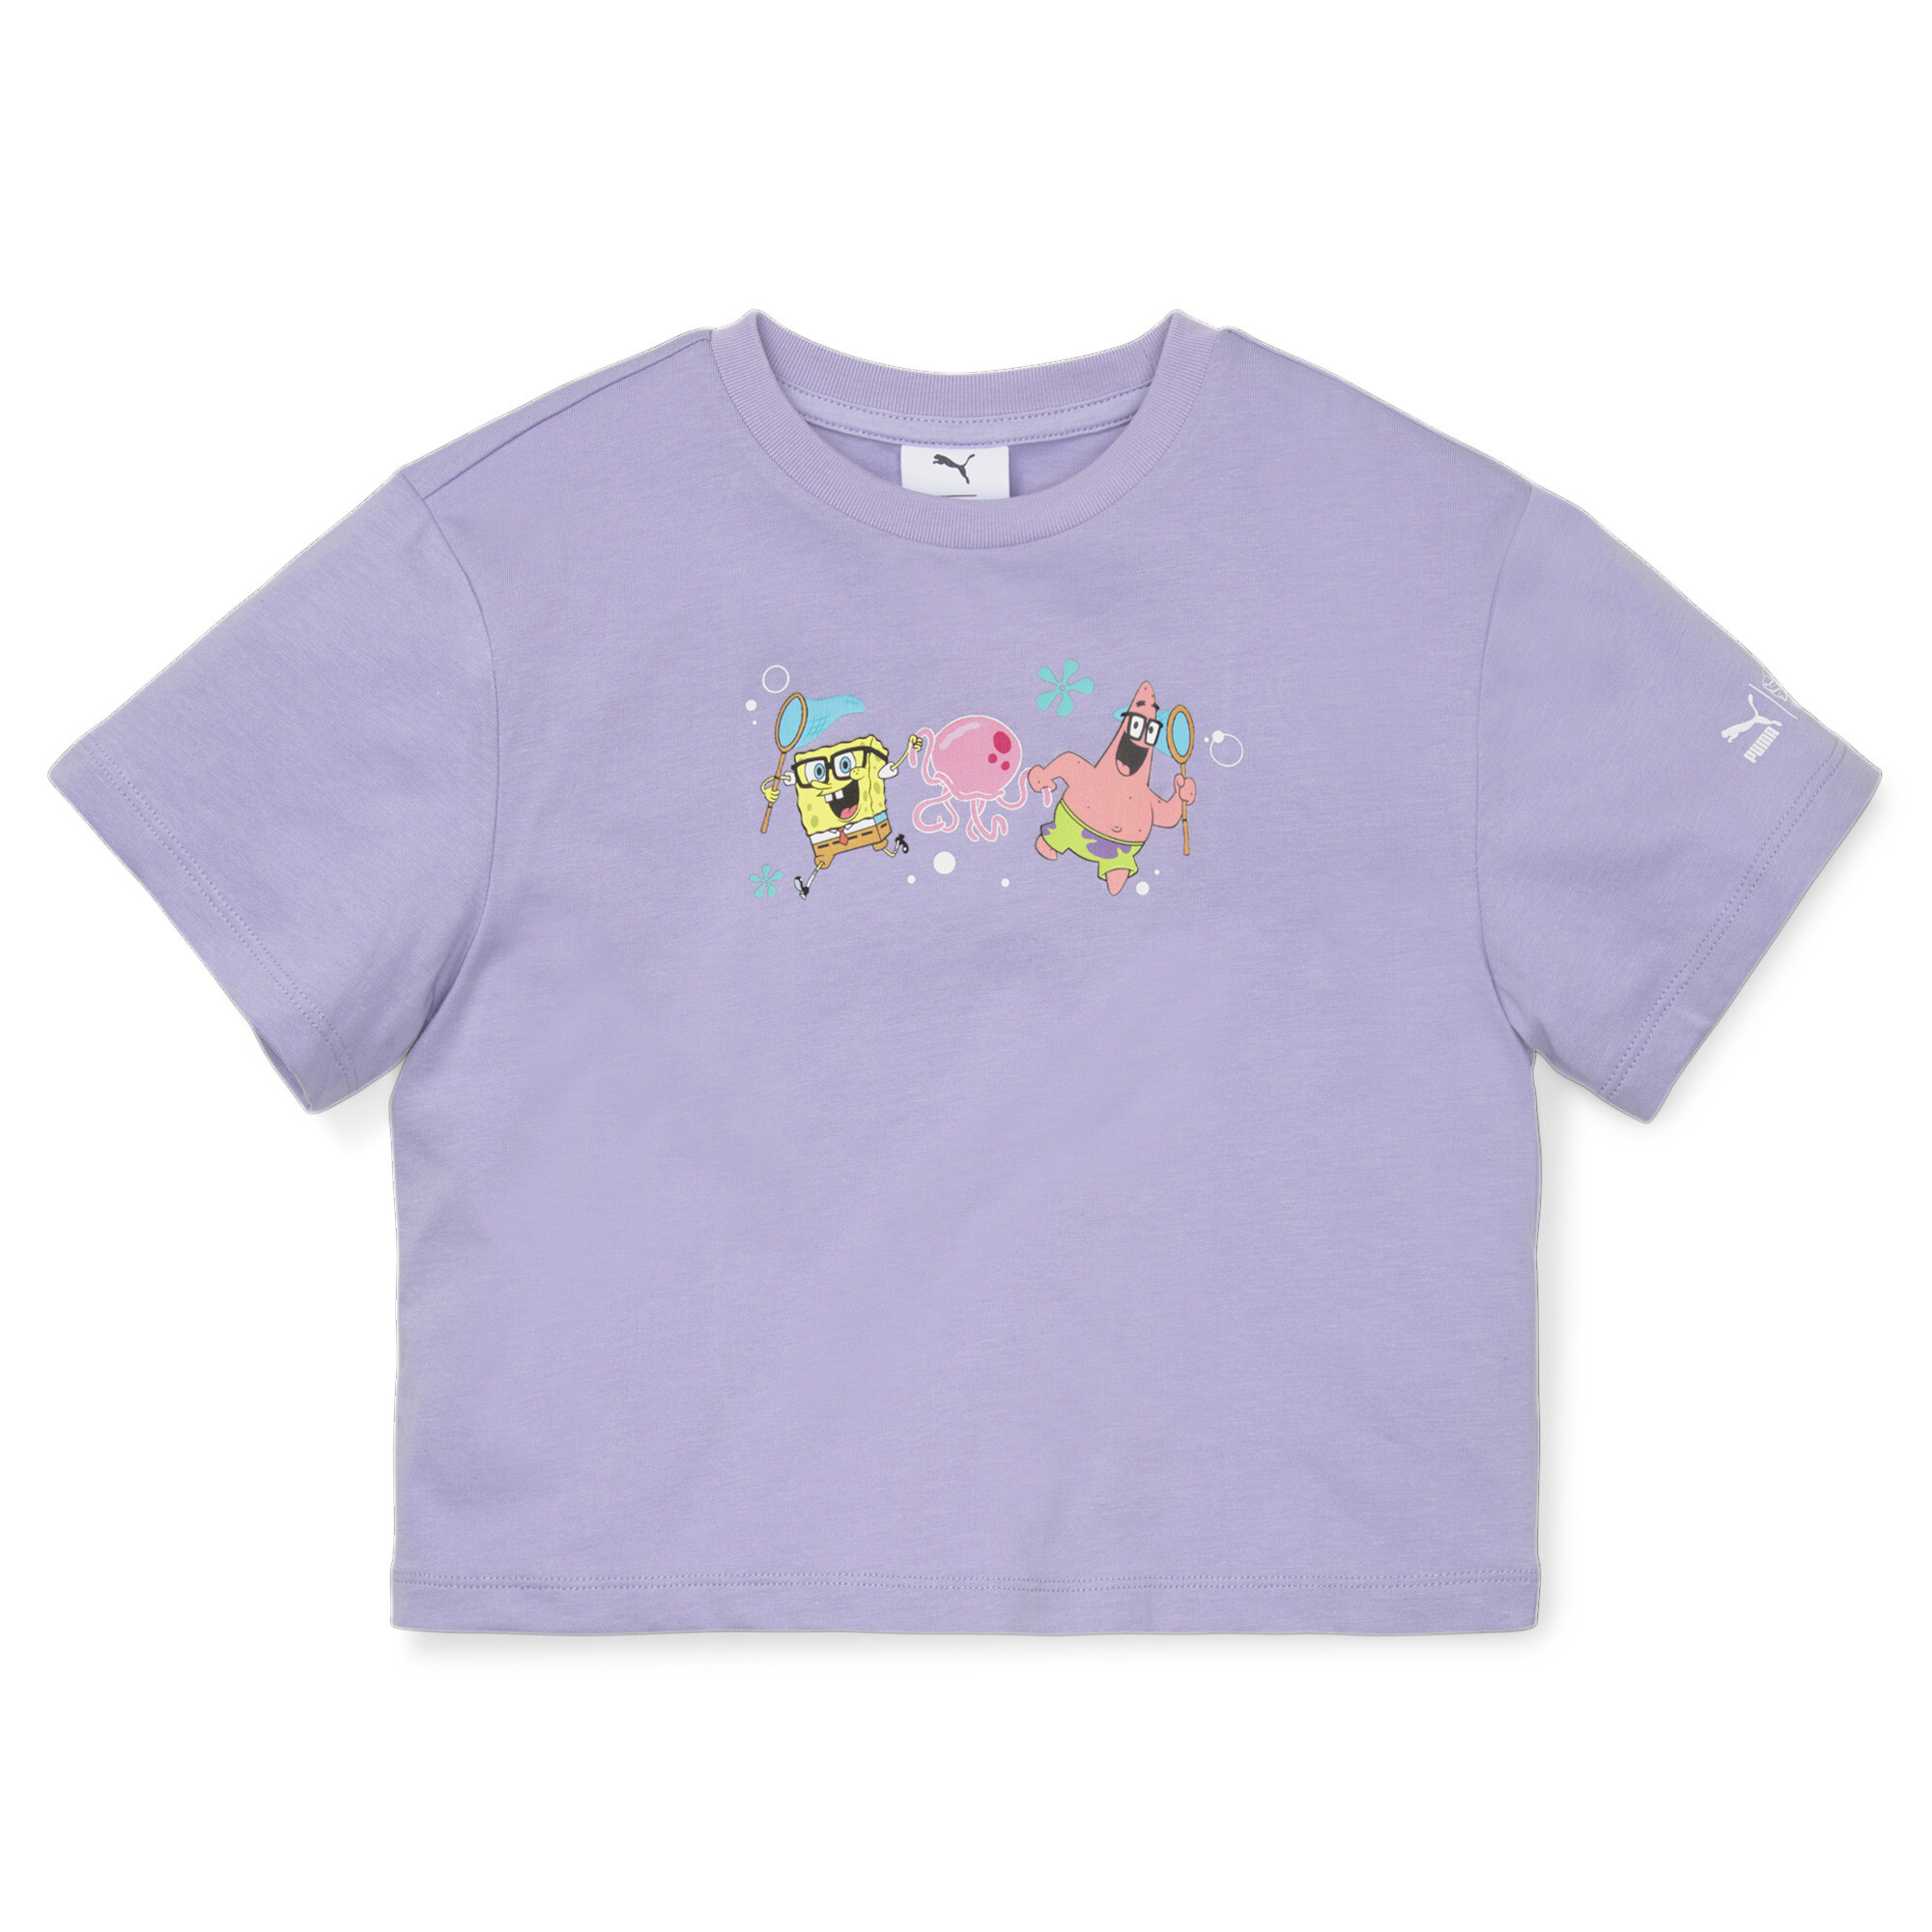 PUMA X SPONGEBOB T-Shirt Kids In Purple, Size 7-8 Youth